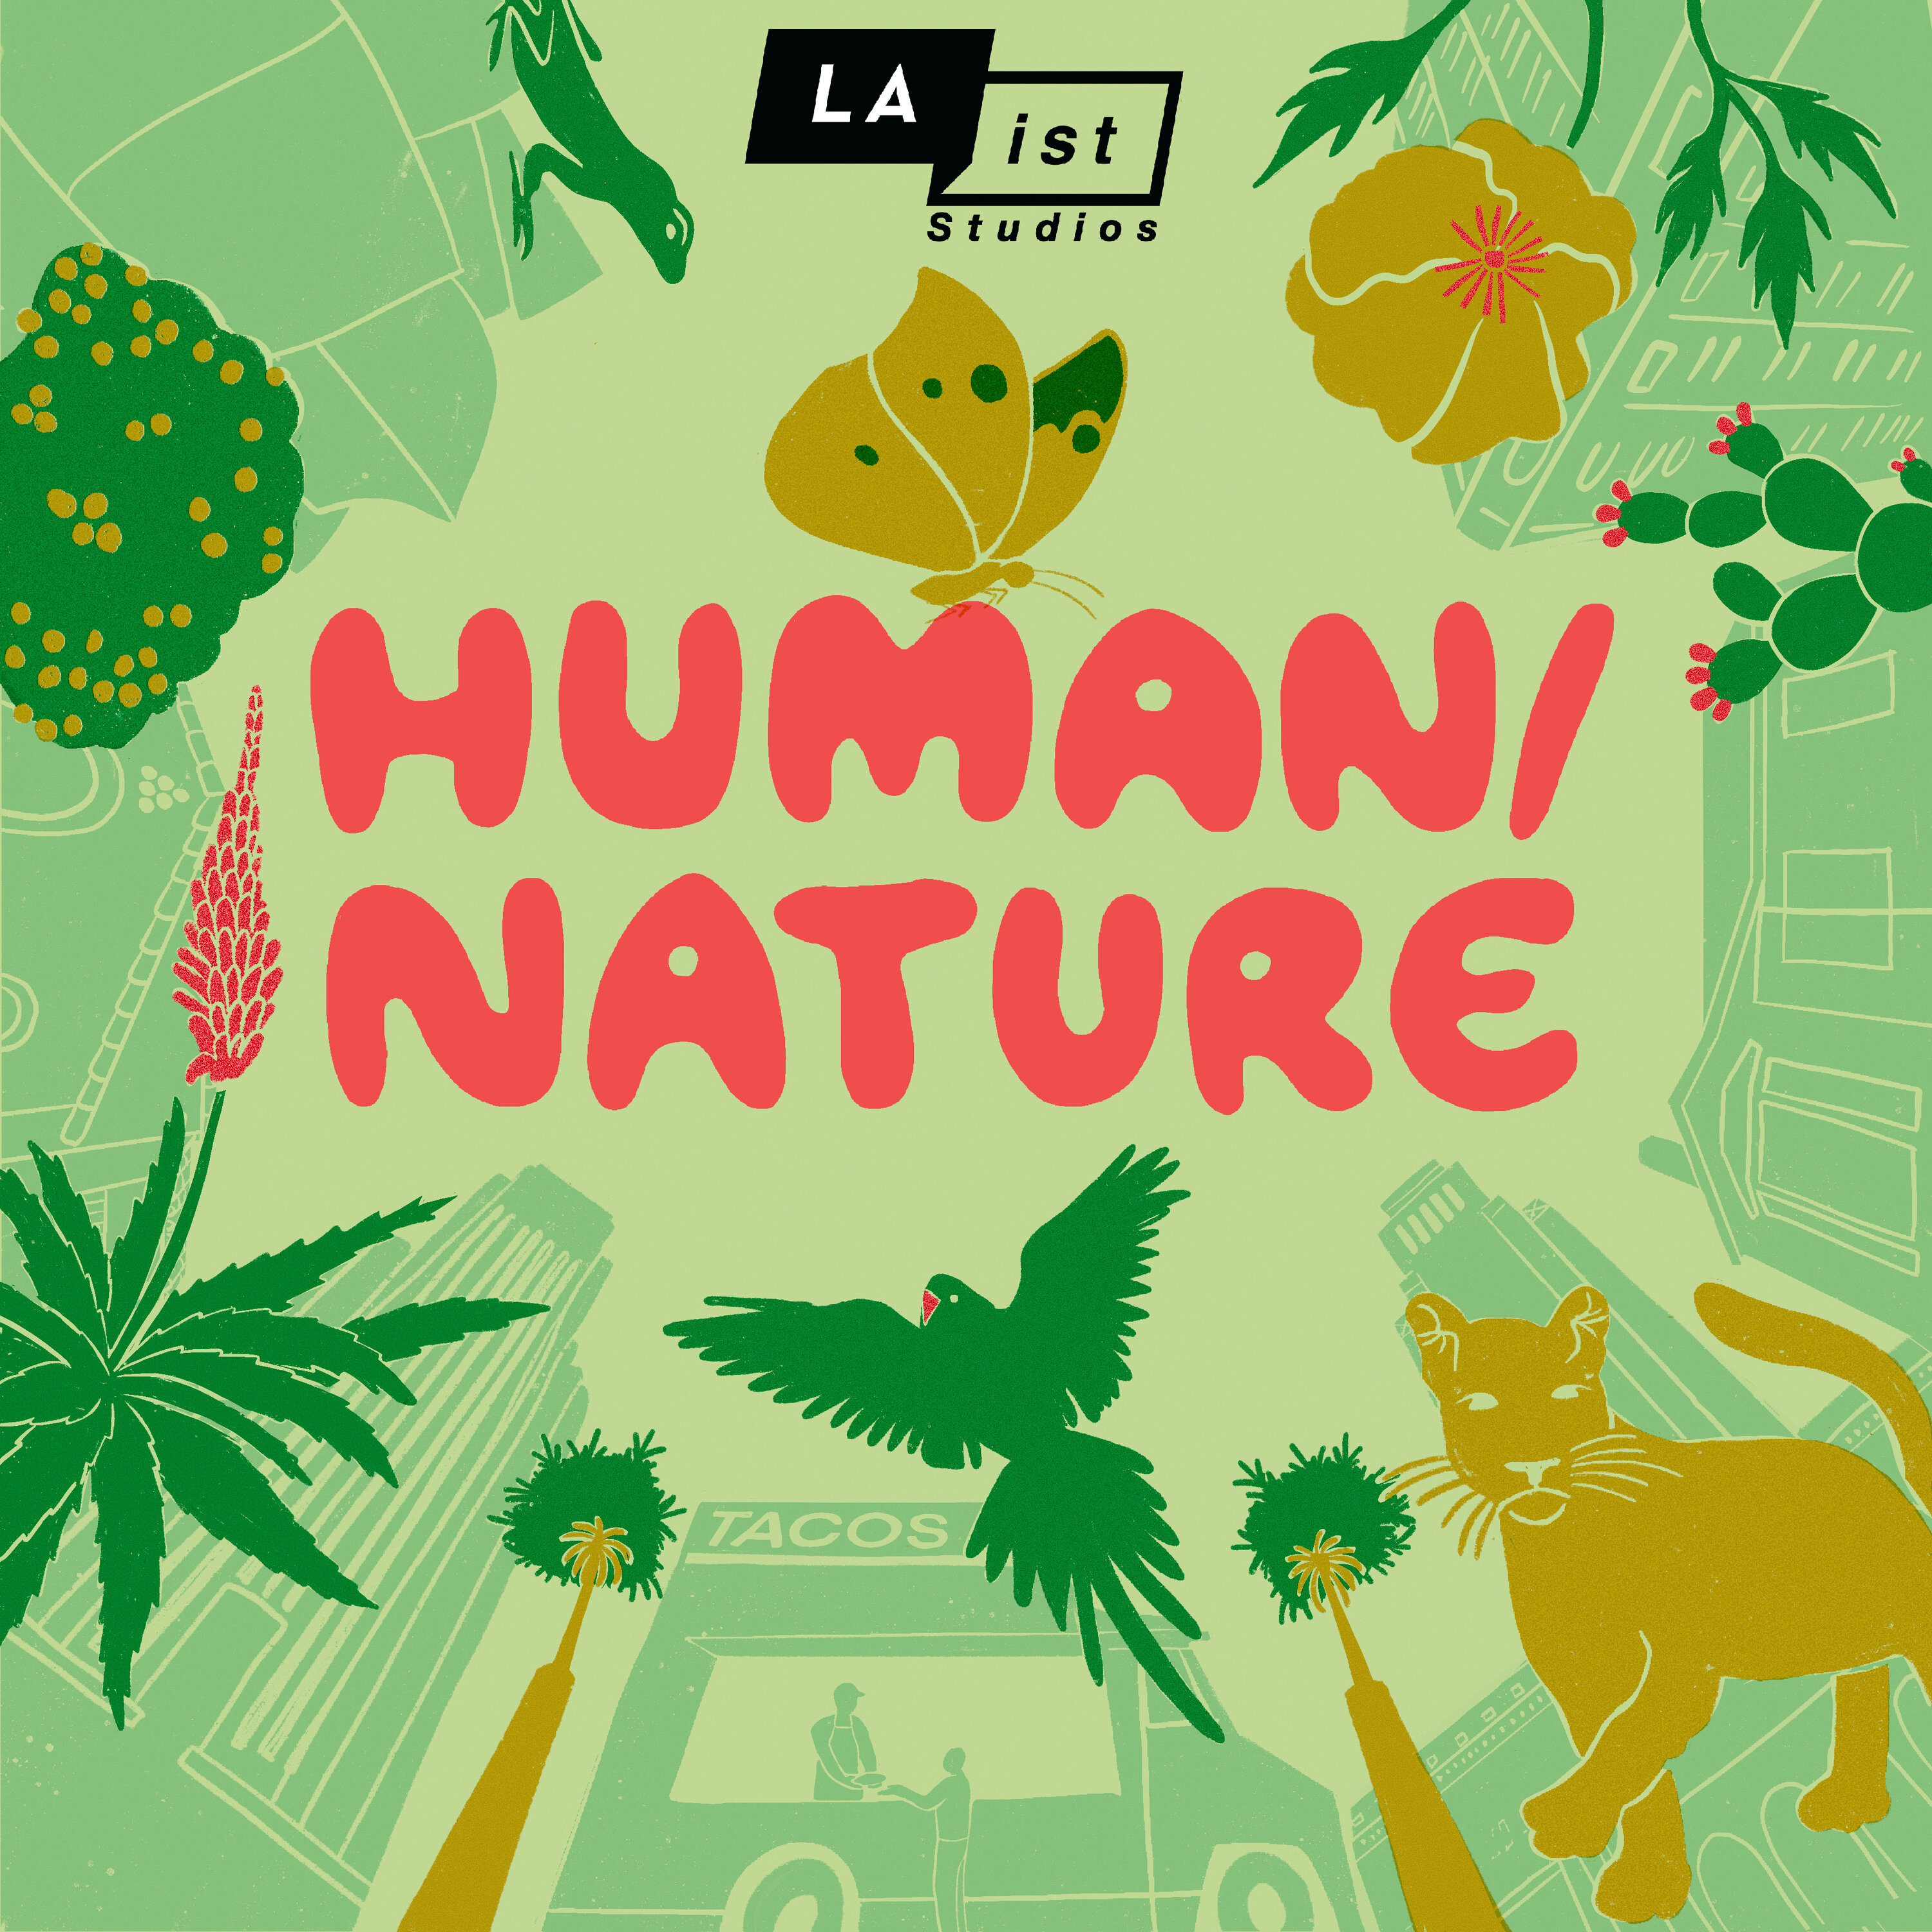 Introducing Human/Nature, from LAist Studios